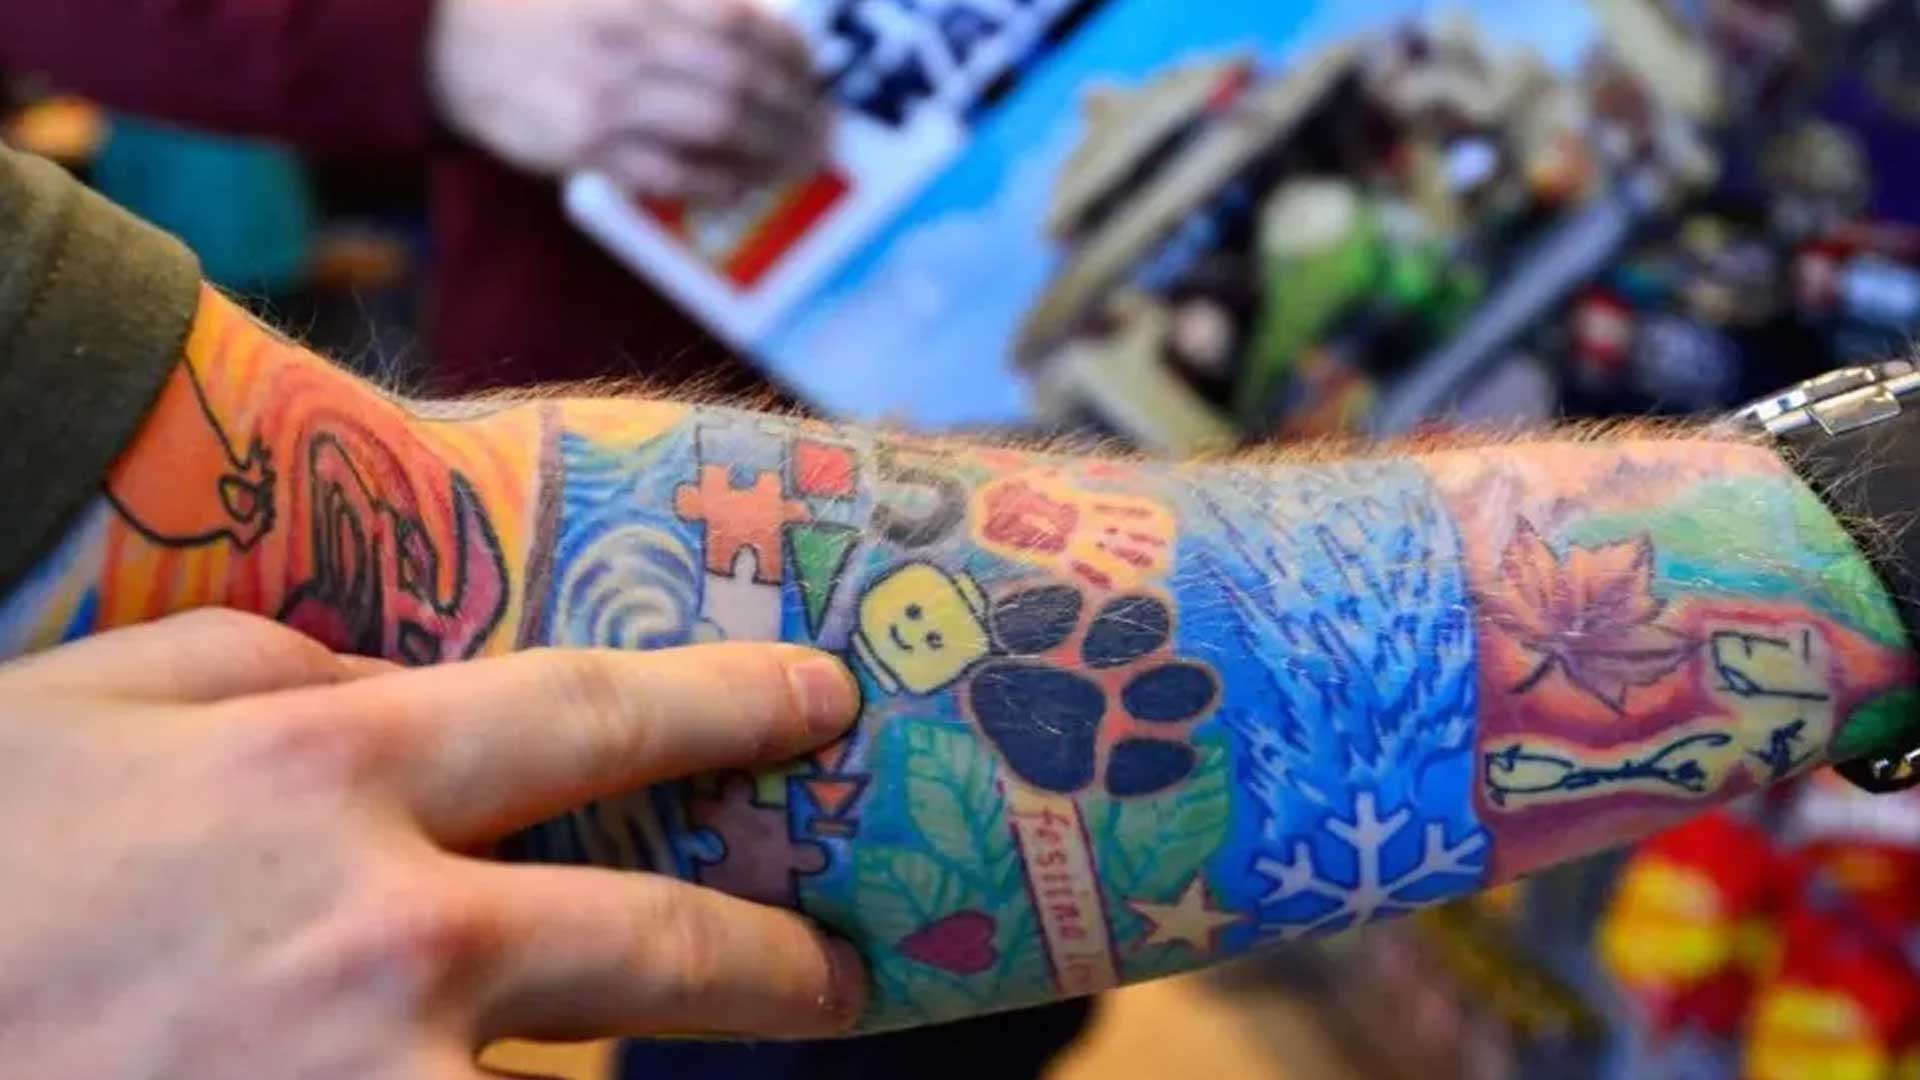 Ed Sheeran points to his many tattoos